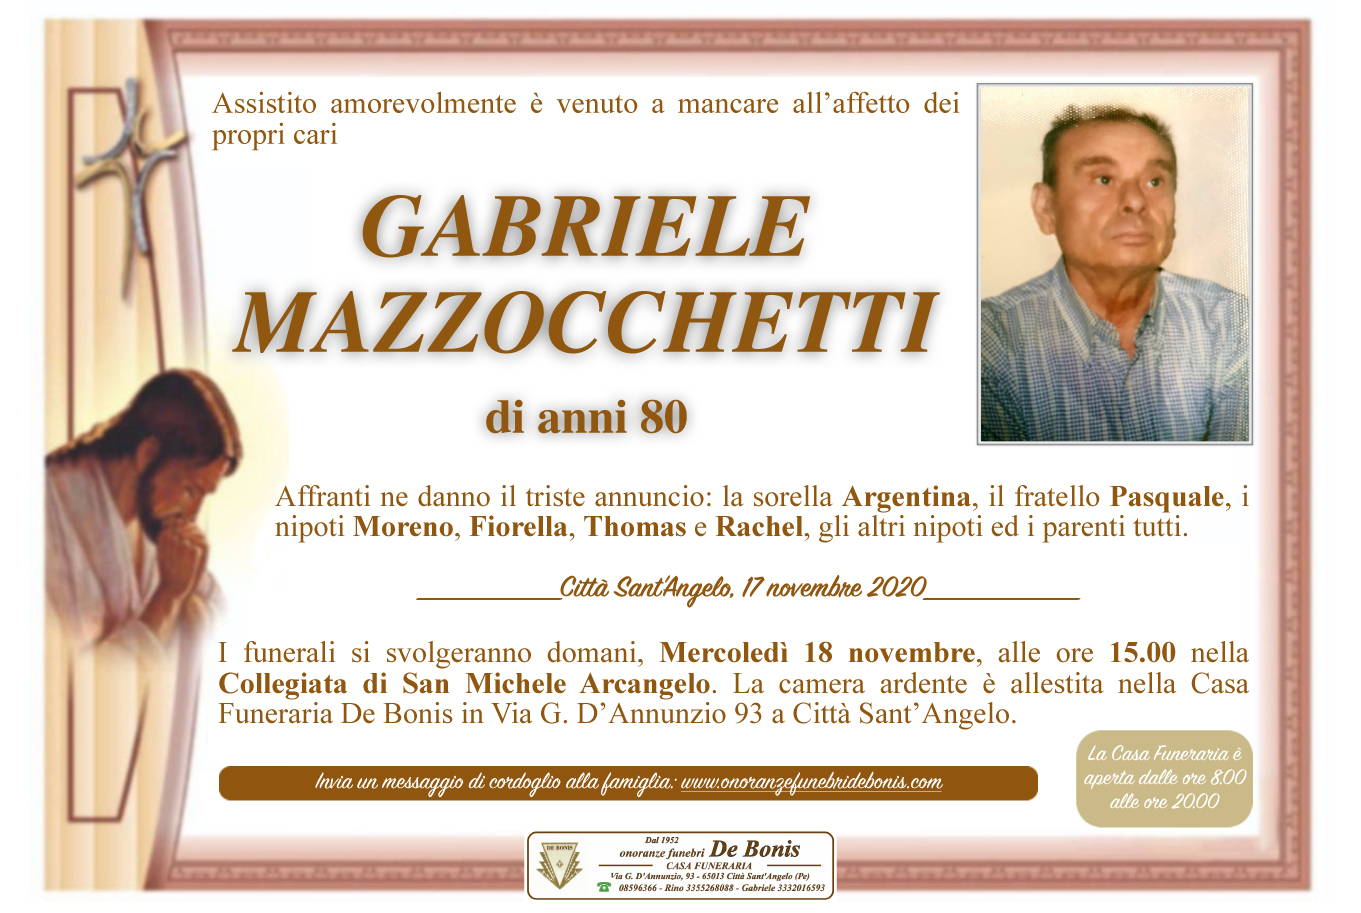 Gabriele Mazzocchetti